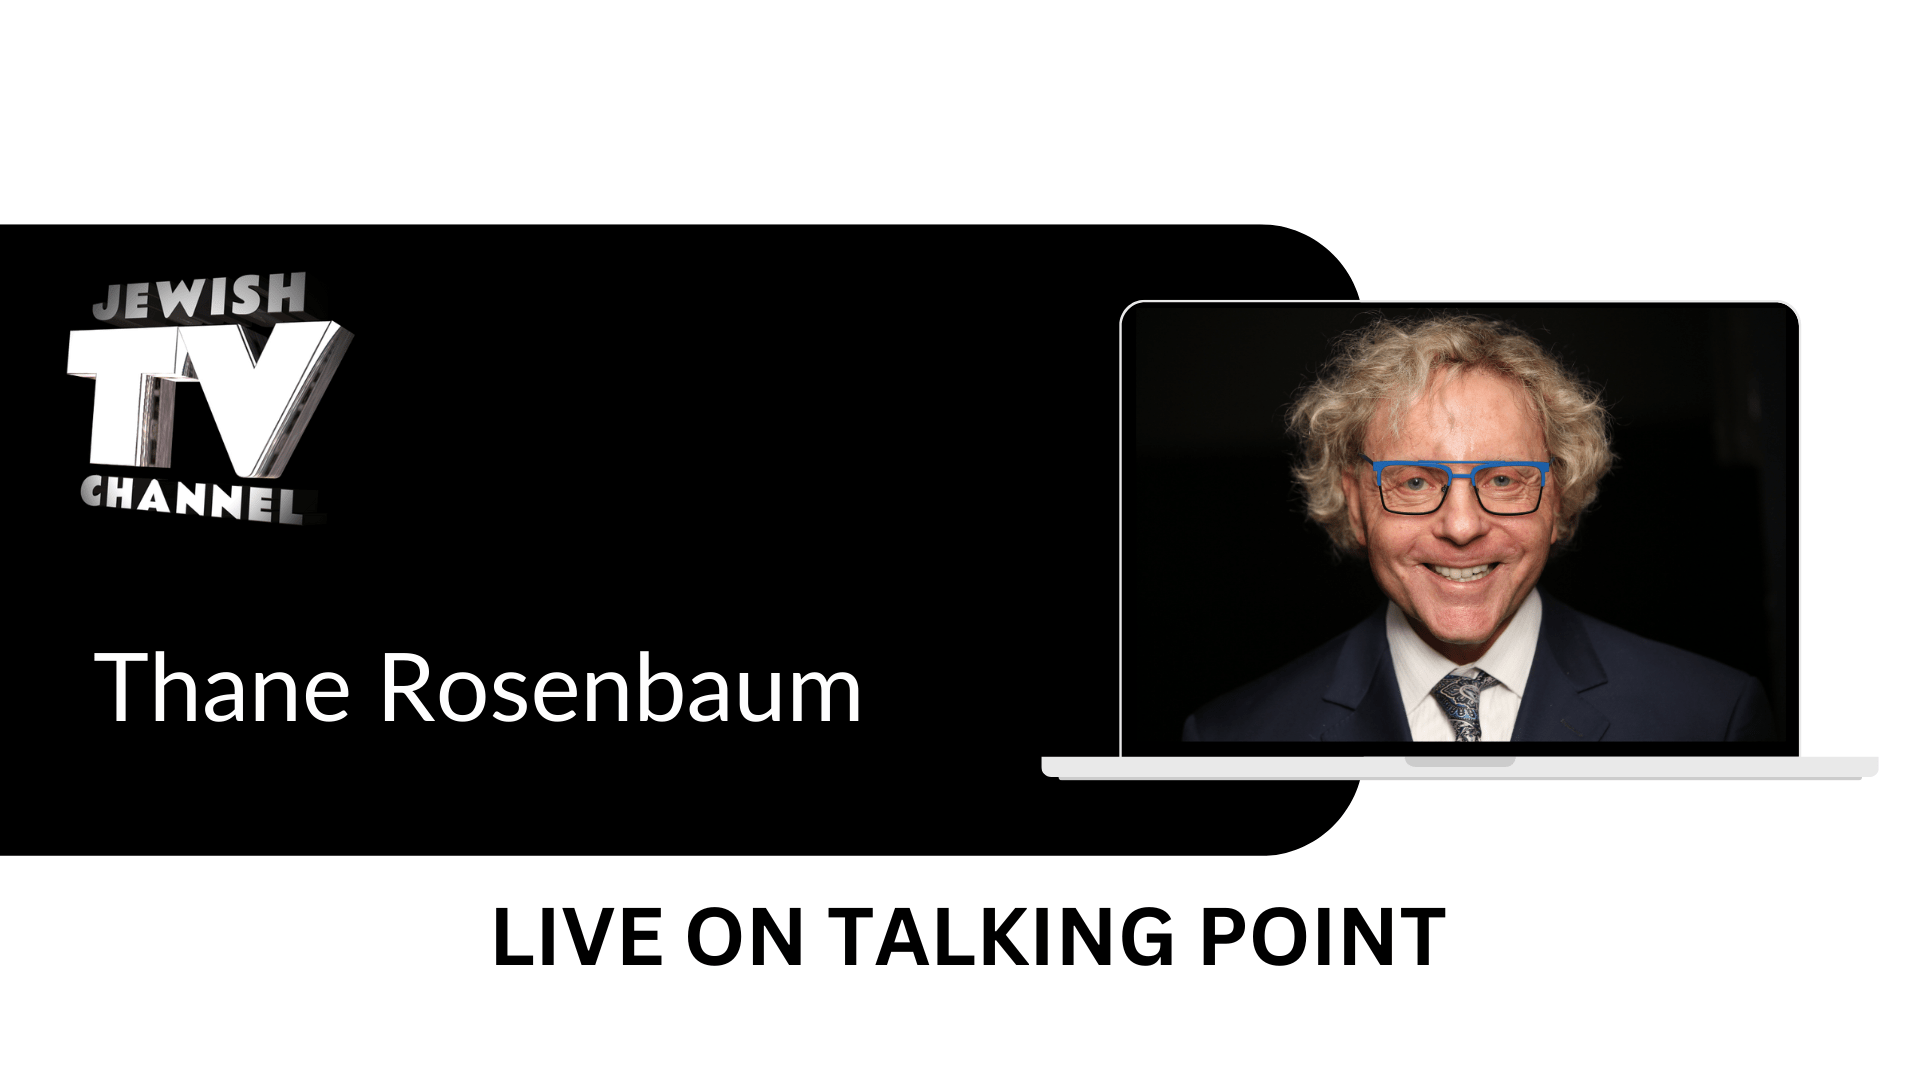 Thane Rosenbaum To Appear On JTVC Talking Point